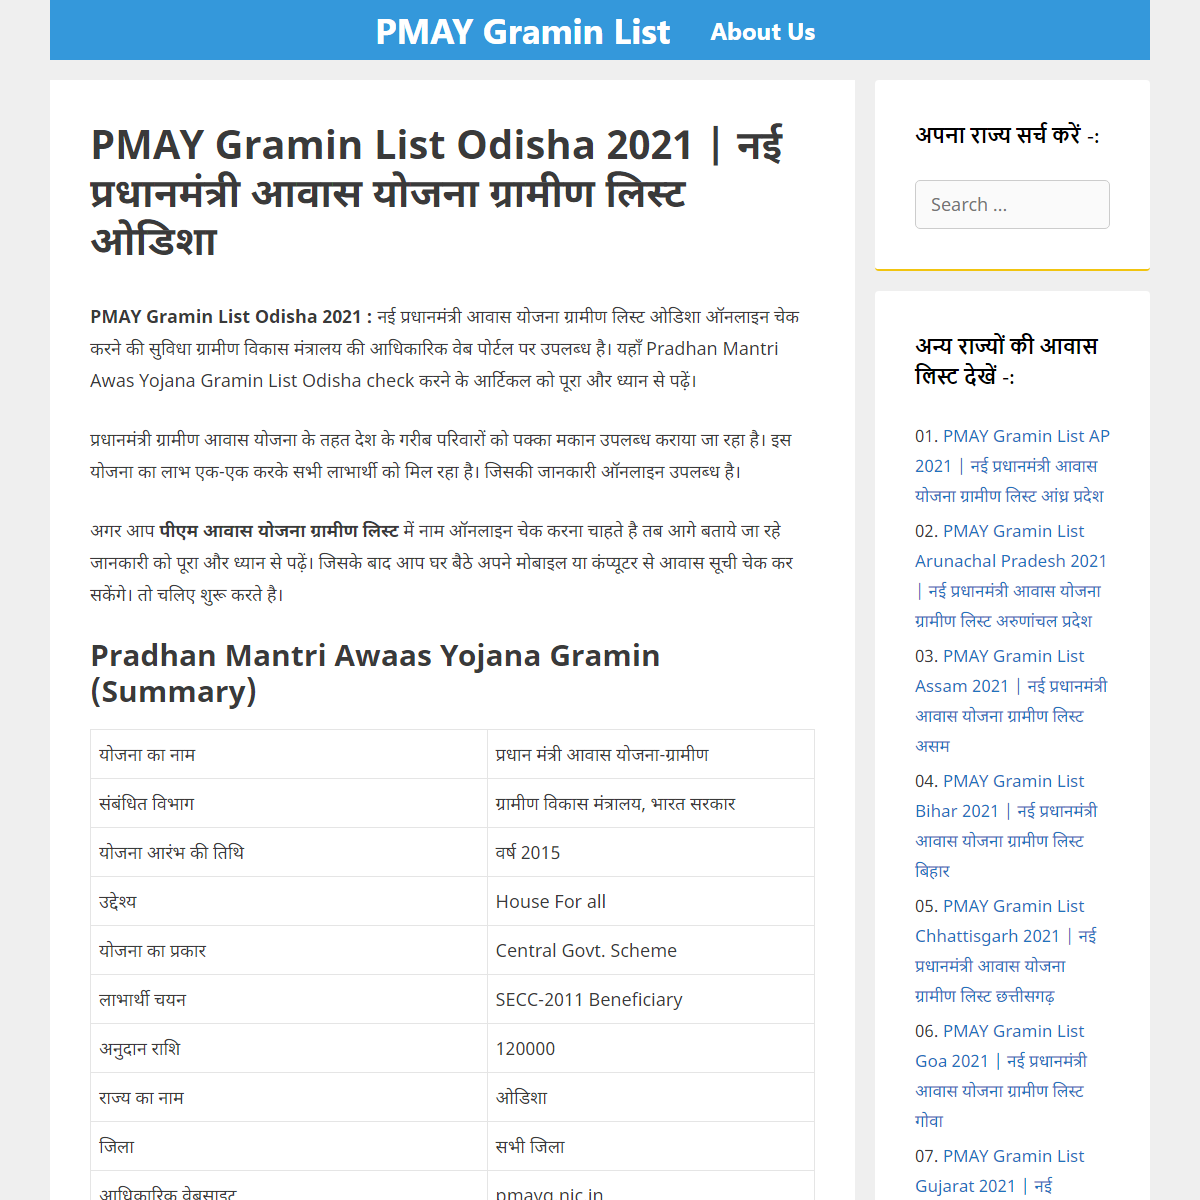 A complete backup of https://pmaygraminlist.in/pradhan-mantri-awas-yojana-gramin-list-odisha/